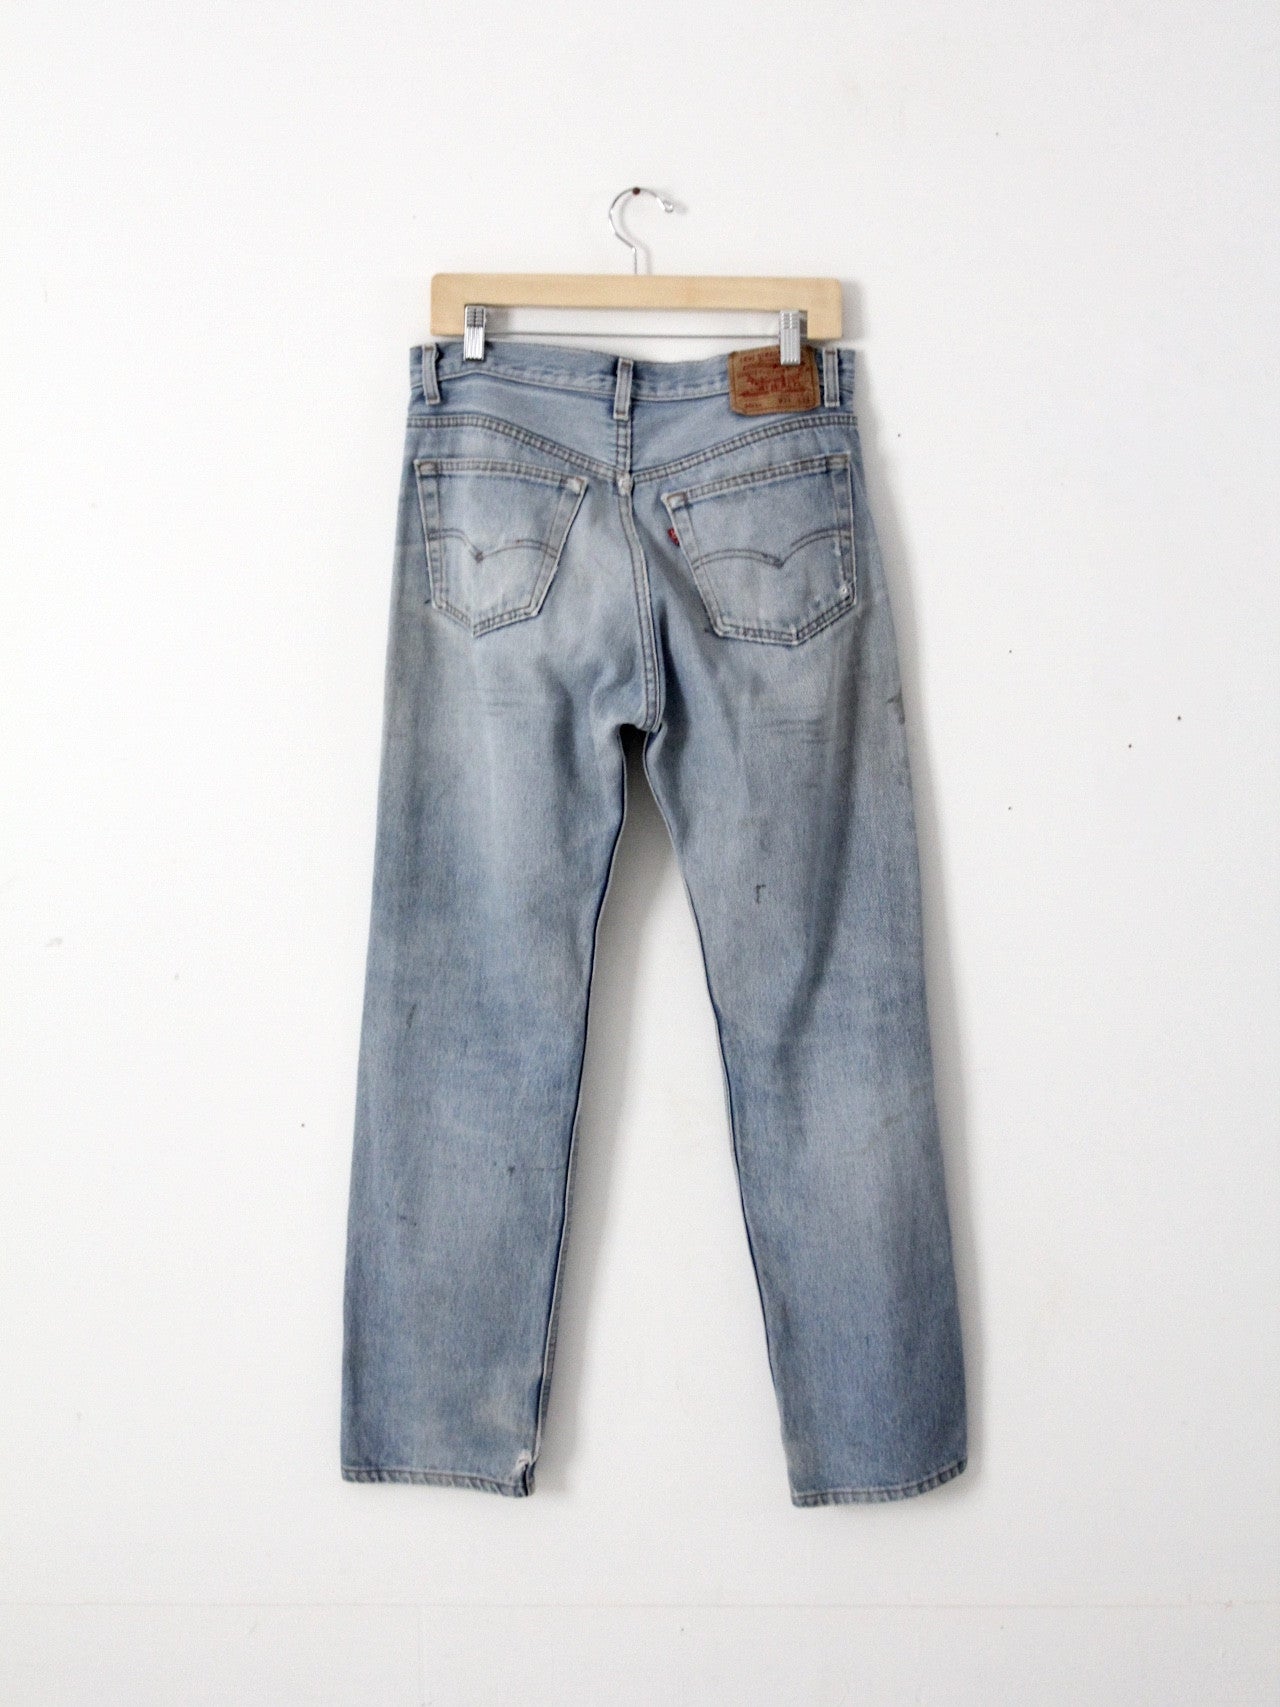 Vintage Levis 501 Jeans Size 30 Patched Levis Faded Levis Small